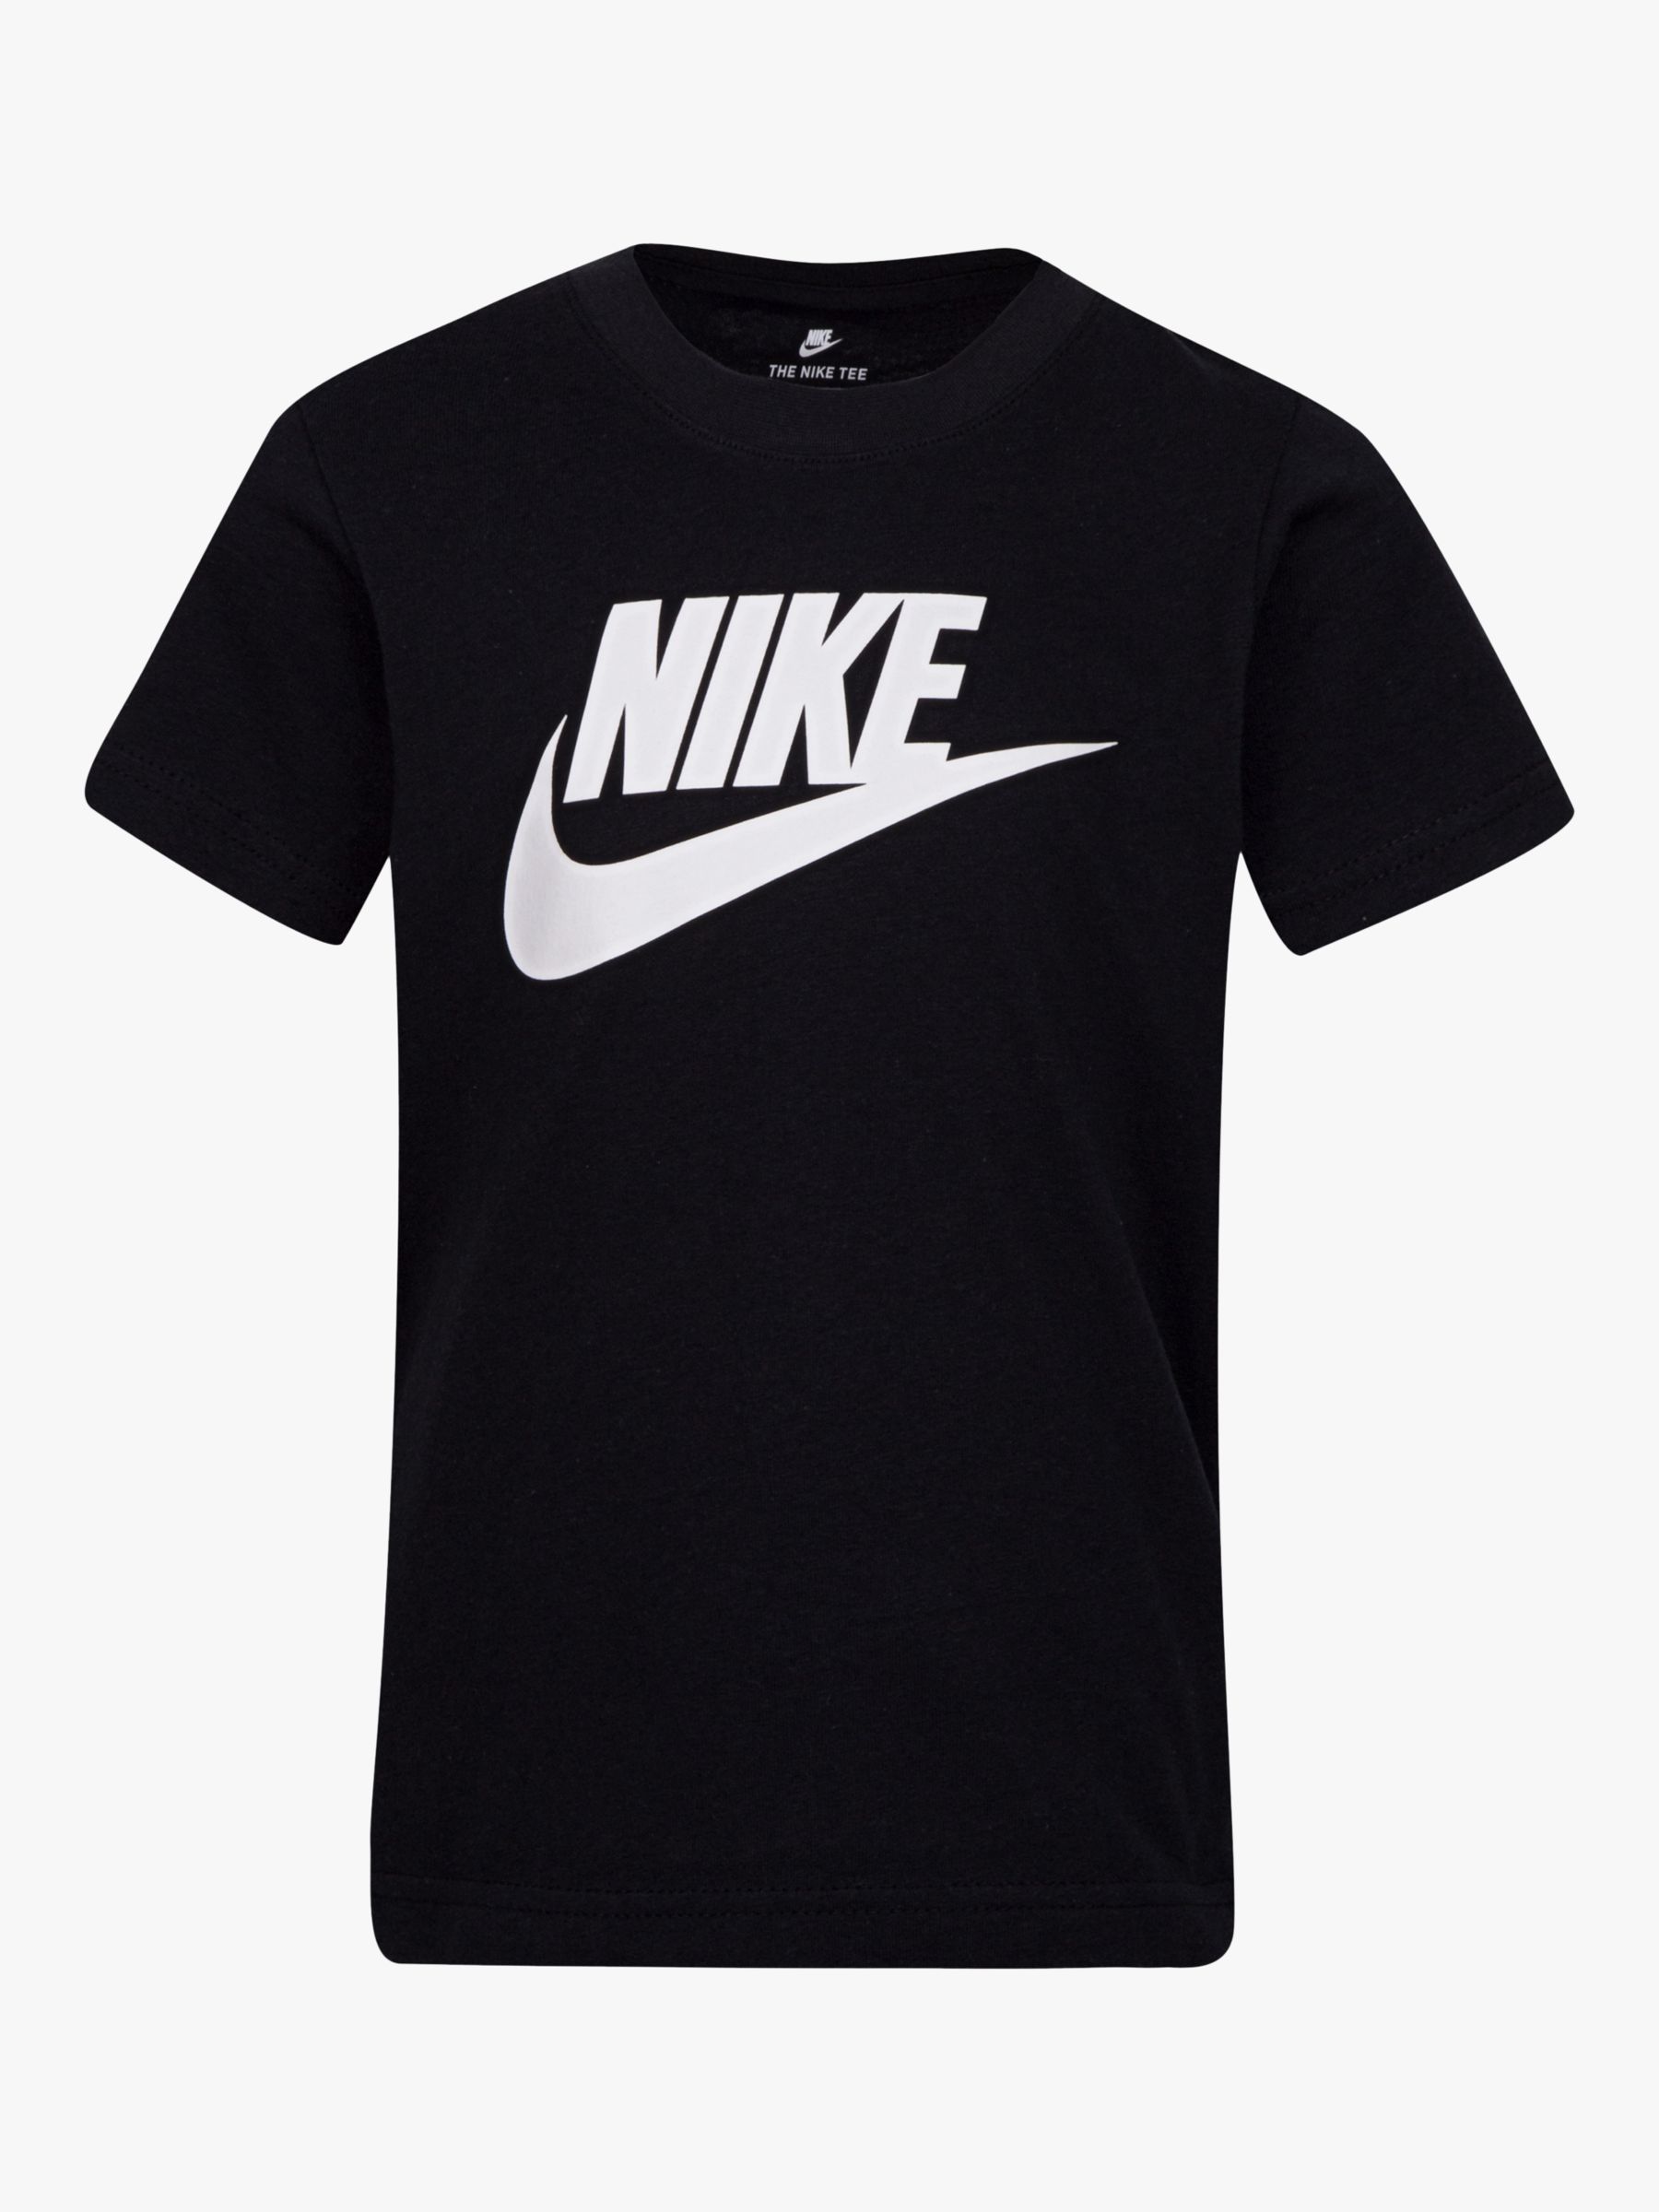 Nike Kids' Logo Short Sleeve T-Shirt, Black at John Lewis & Partners